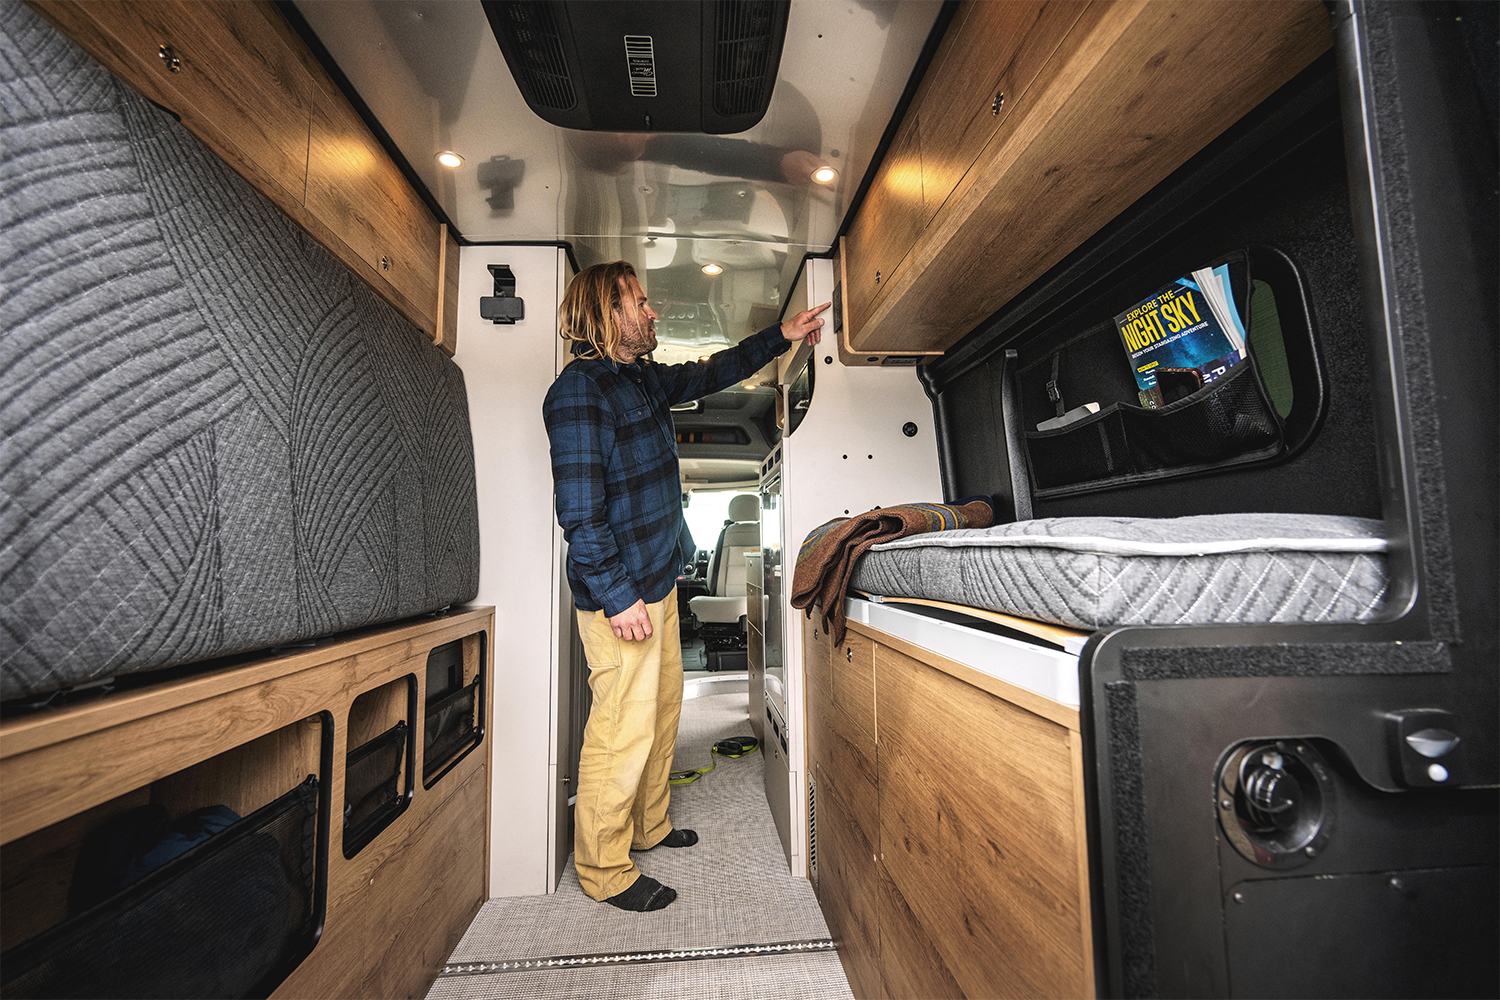 A man changes the settings inside his Airstream Rangeline camper van